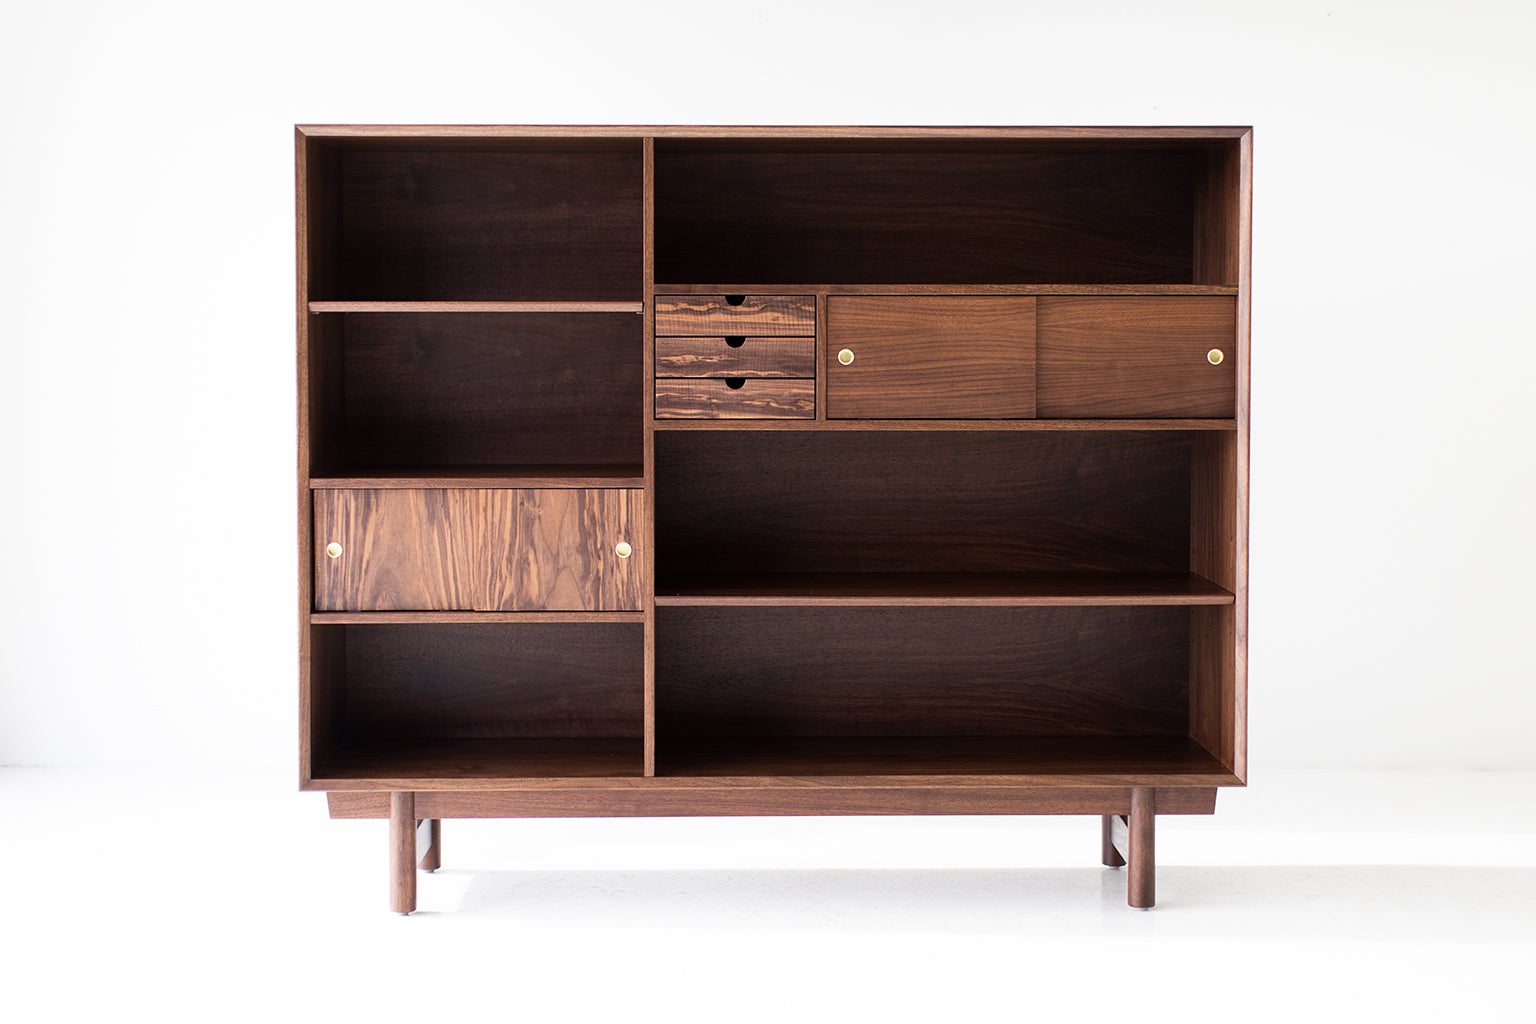 peabody-modern-walnut-bookcase-2106-01